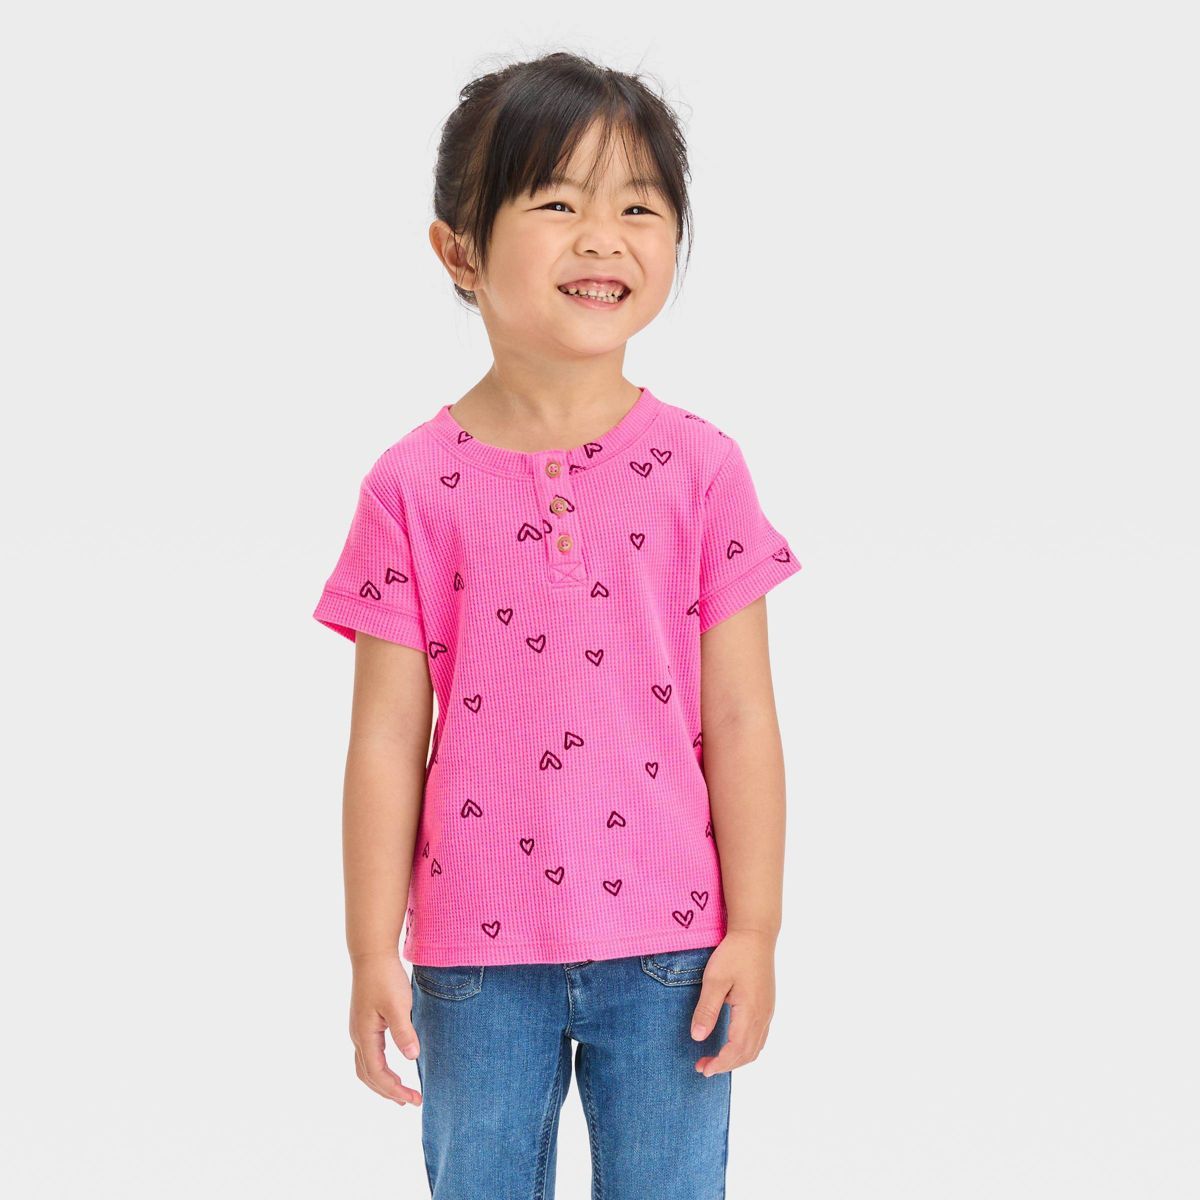 Toddler Girls' Hearts Shirt - Cat & Jack™ Pink | Target